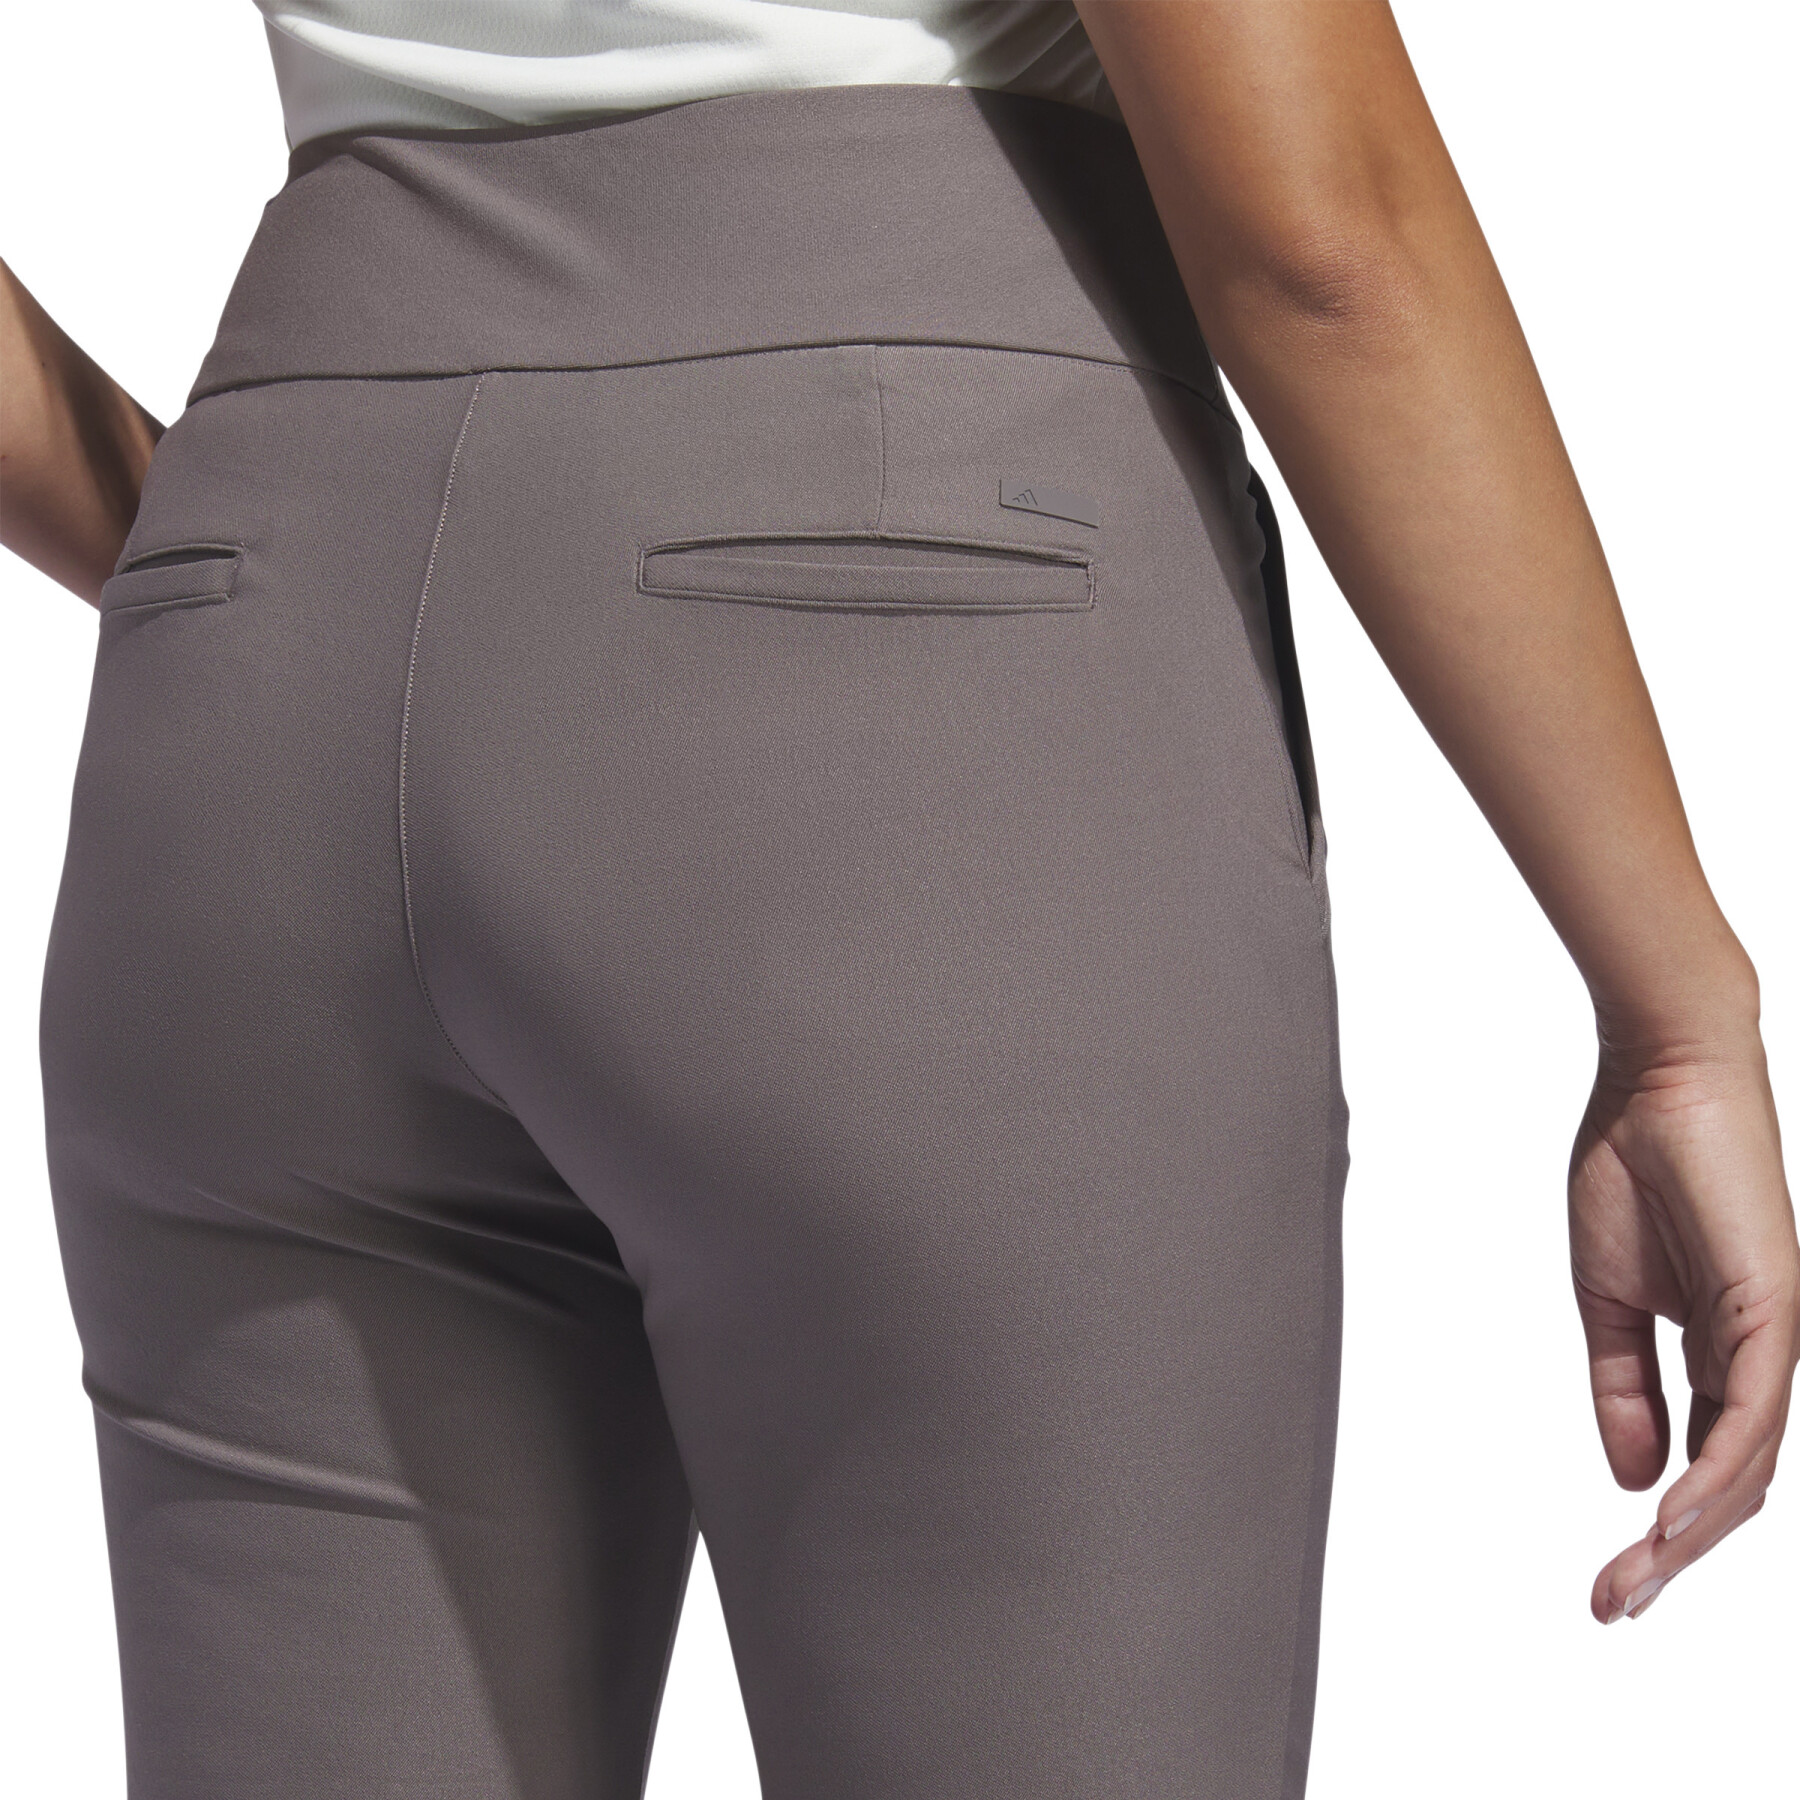 Women's pants adidas Ultimate365